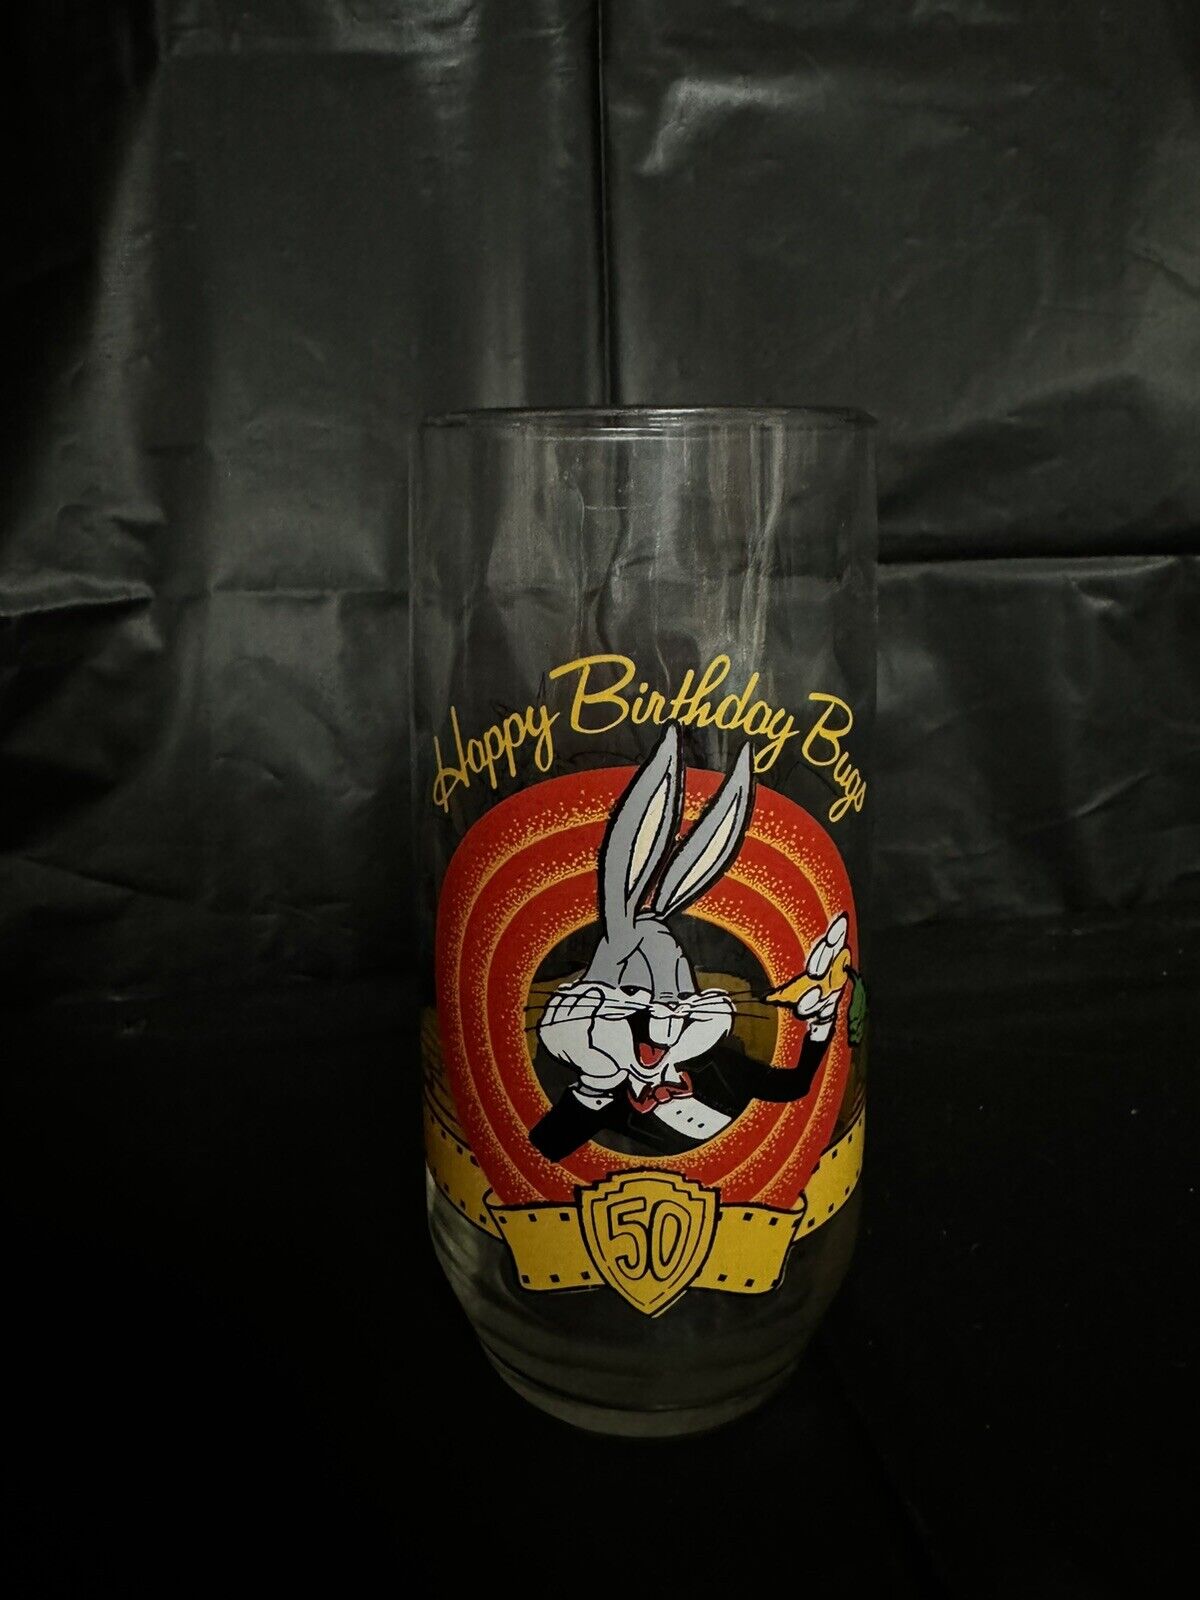 Bugs Bunny Happy Birthday 50th Anniversary Glass 1990 Looney Tunes Warner Bros.